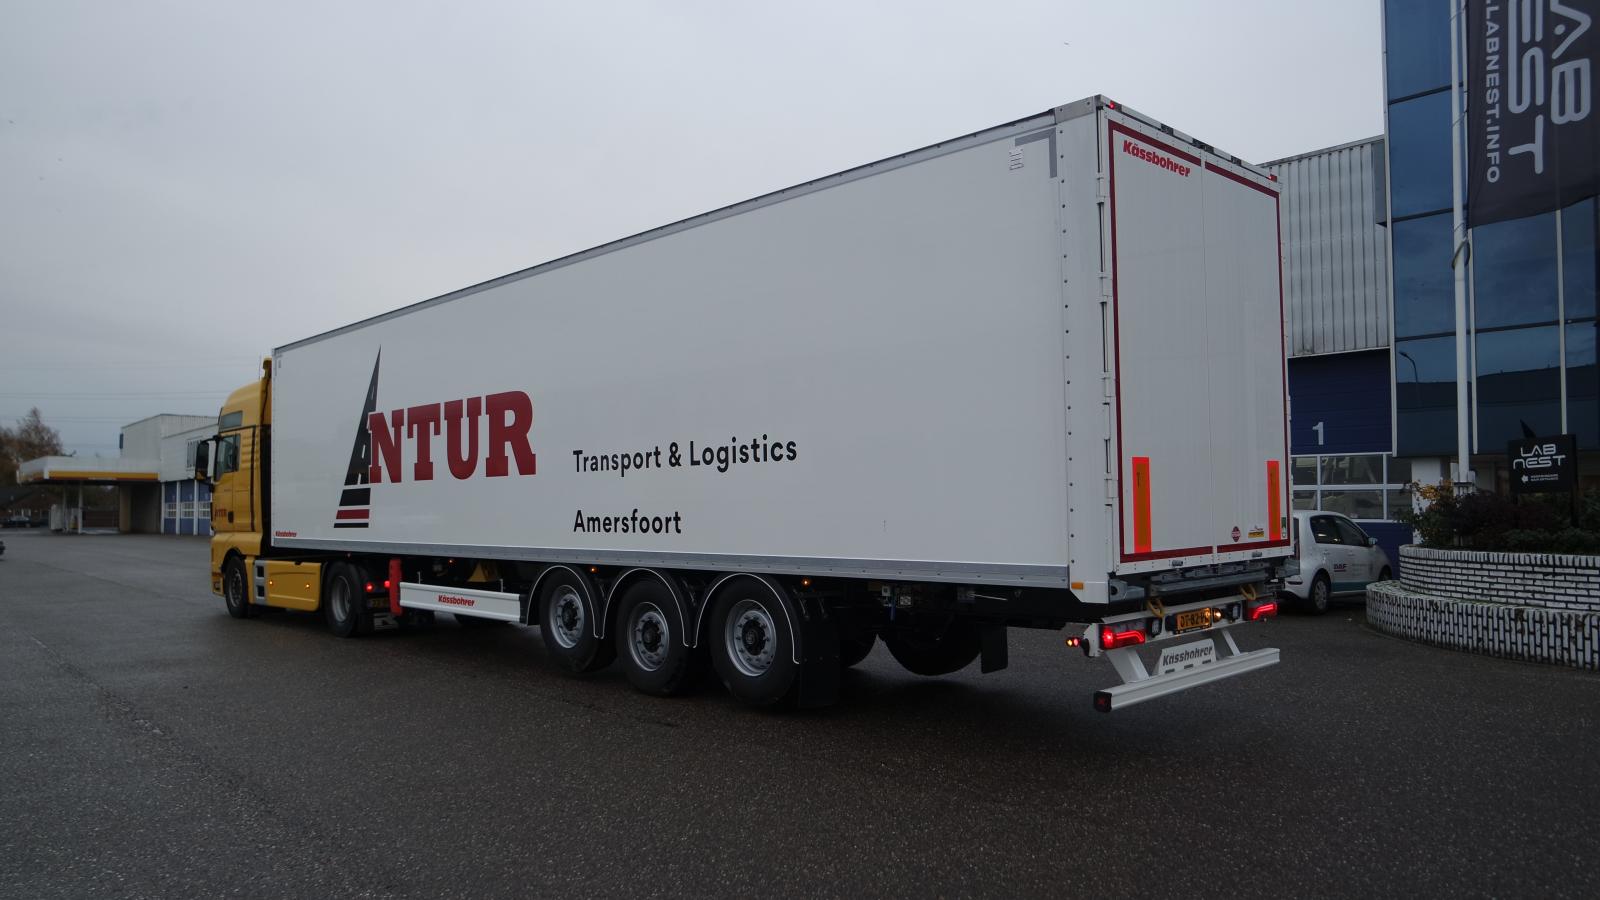 NTUR Transport & Logistics